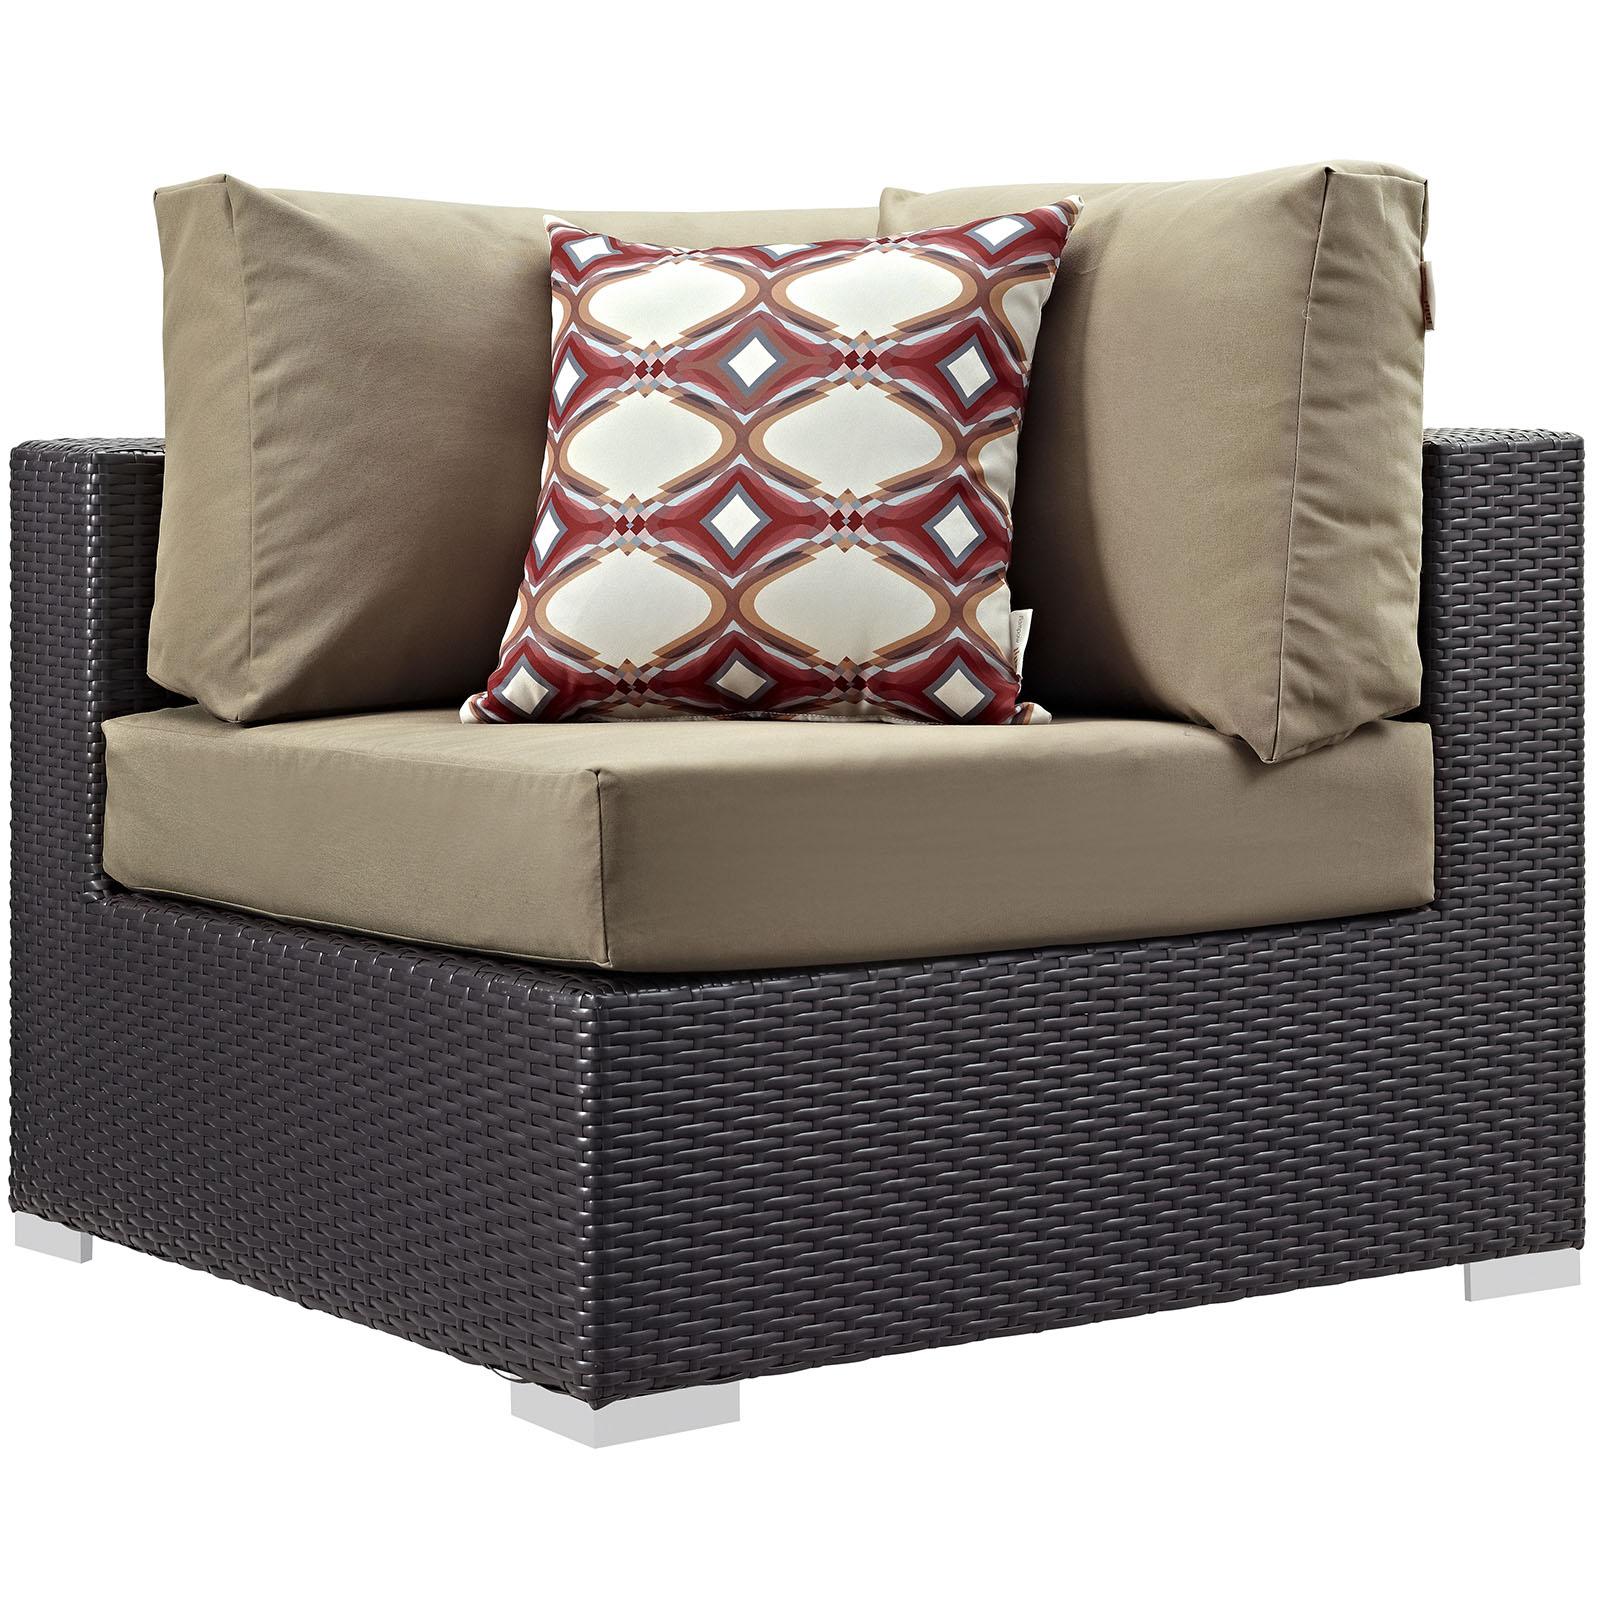 Modway Furniture Modern Convene 7 Piece Outdoor Patio Sectional Set - EEI-2350